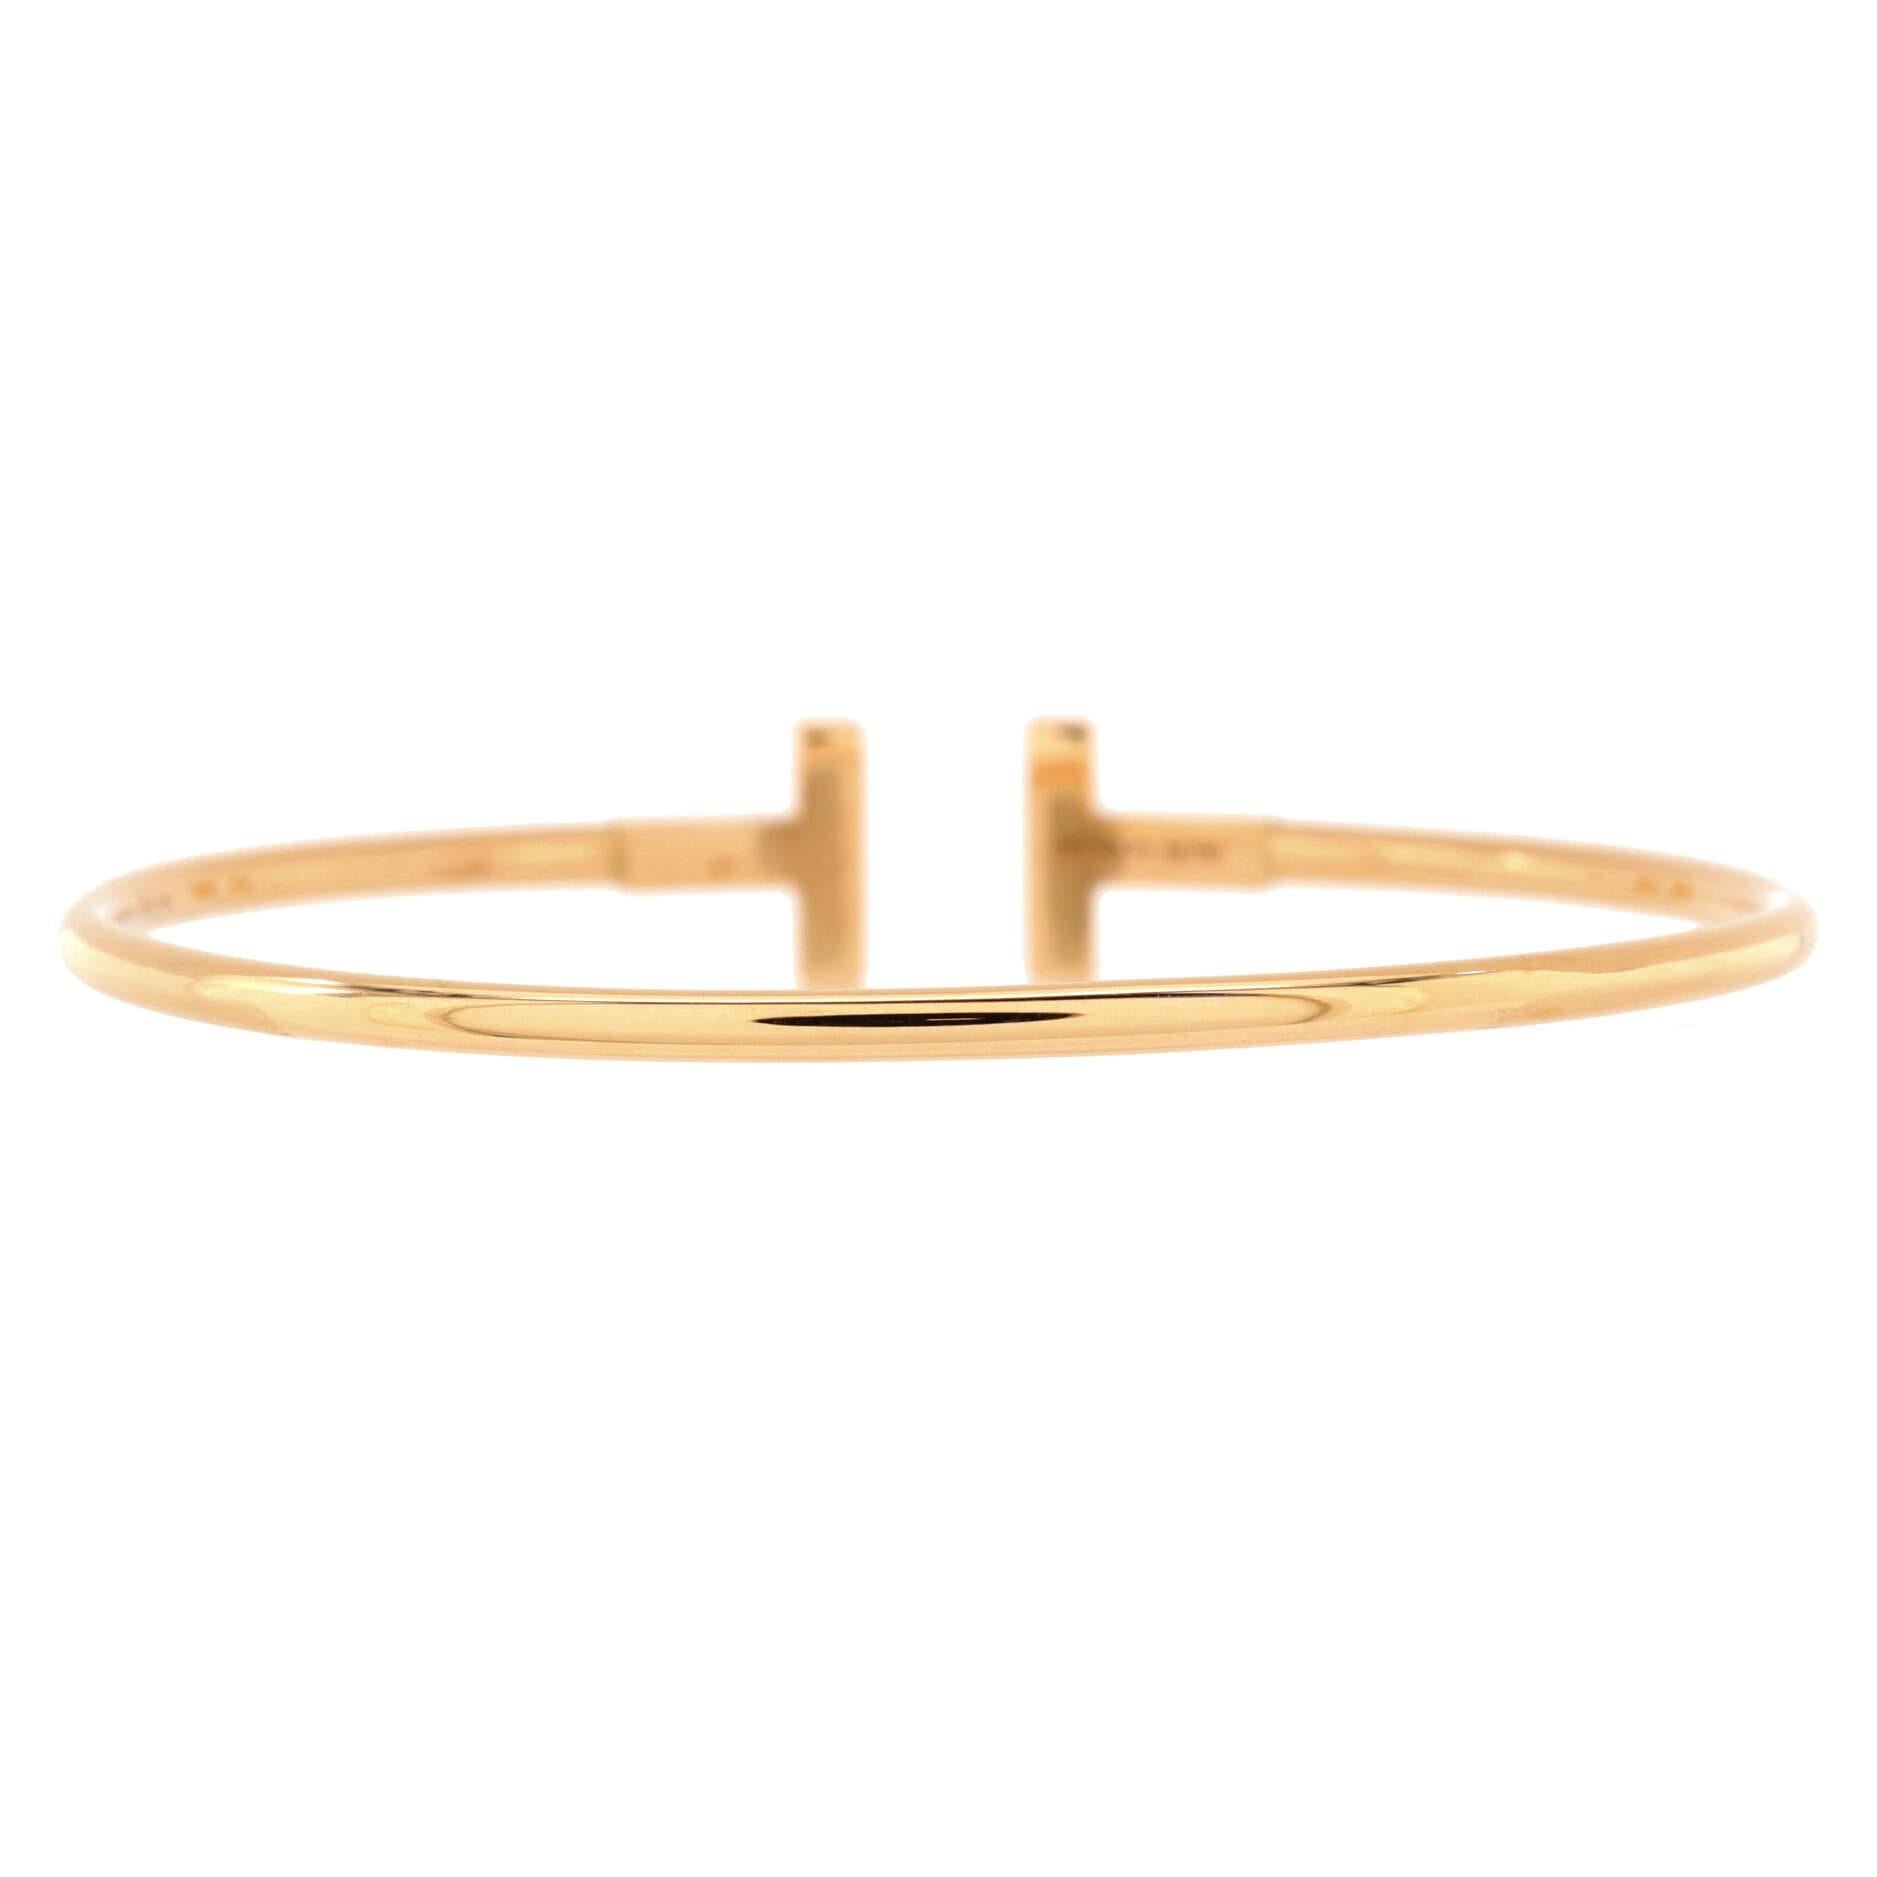 tiffany t wire bracelet rose gold